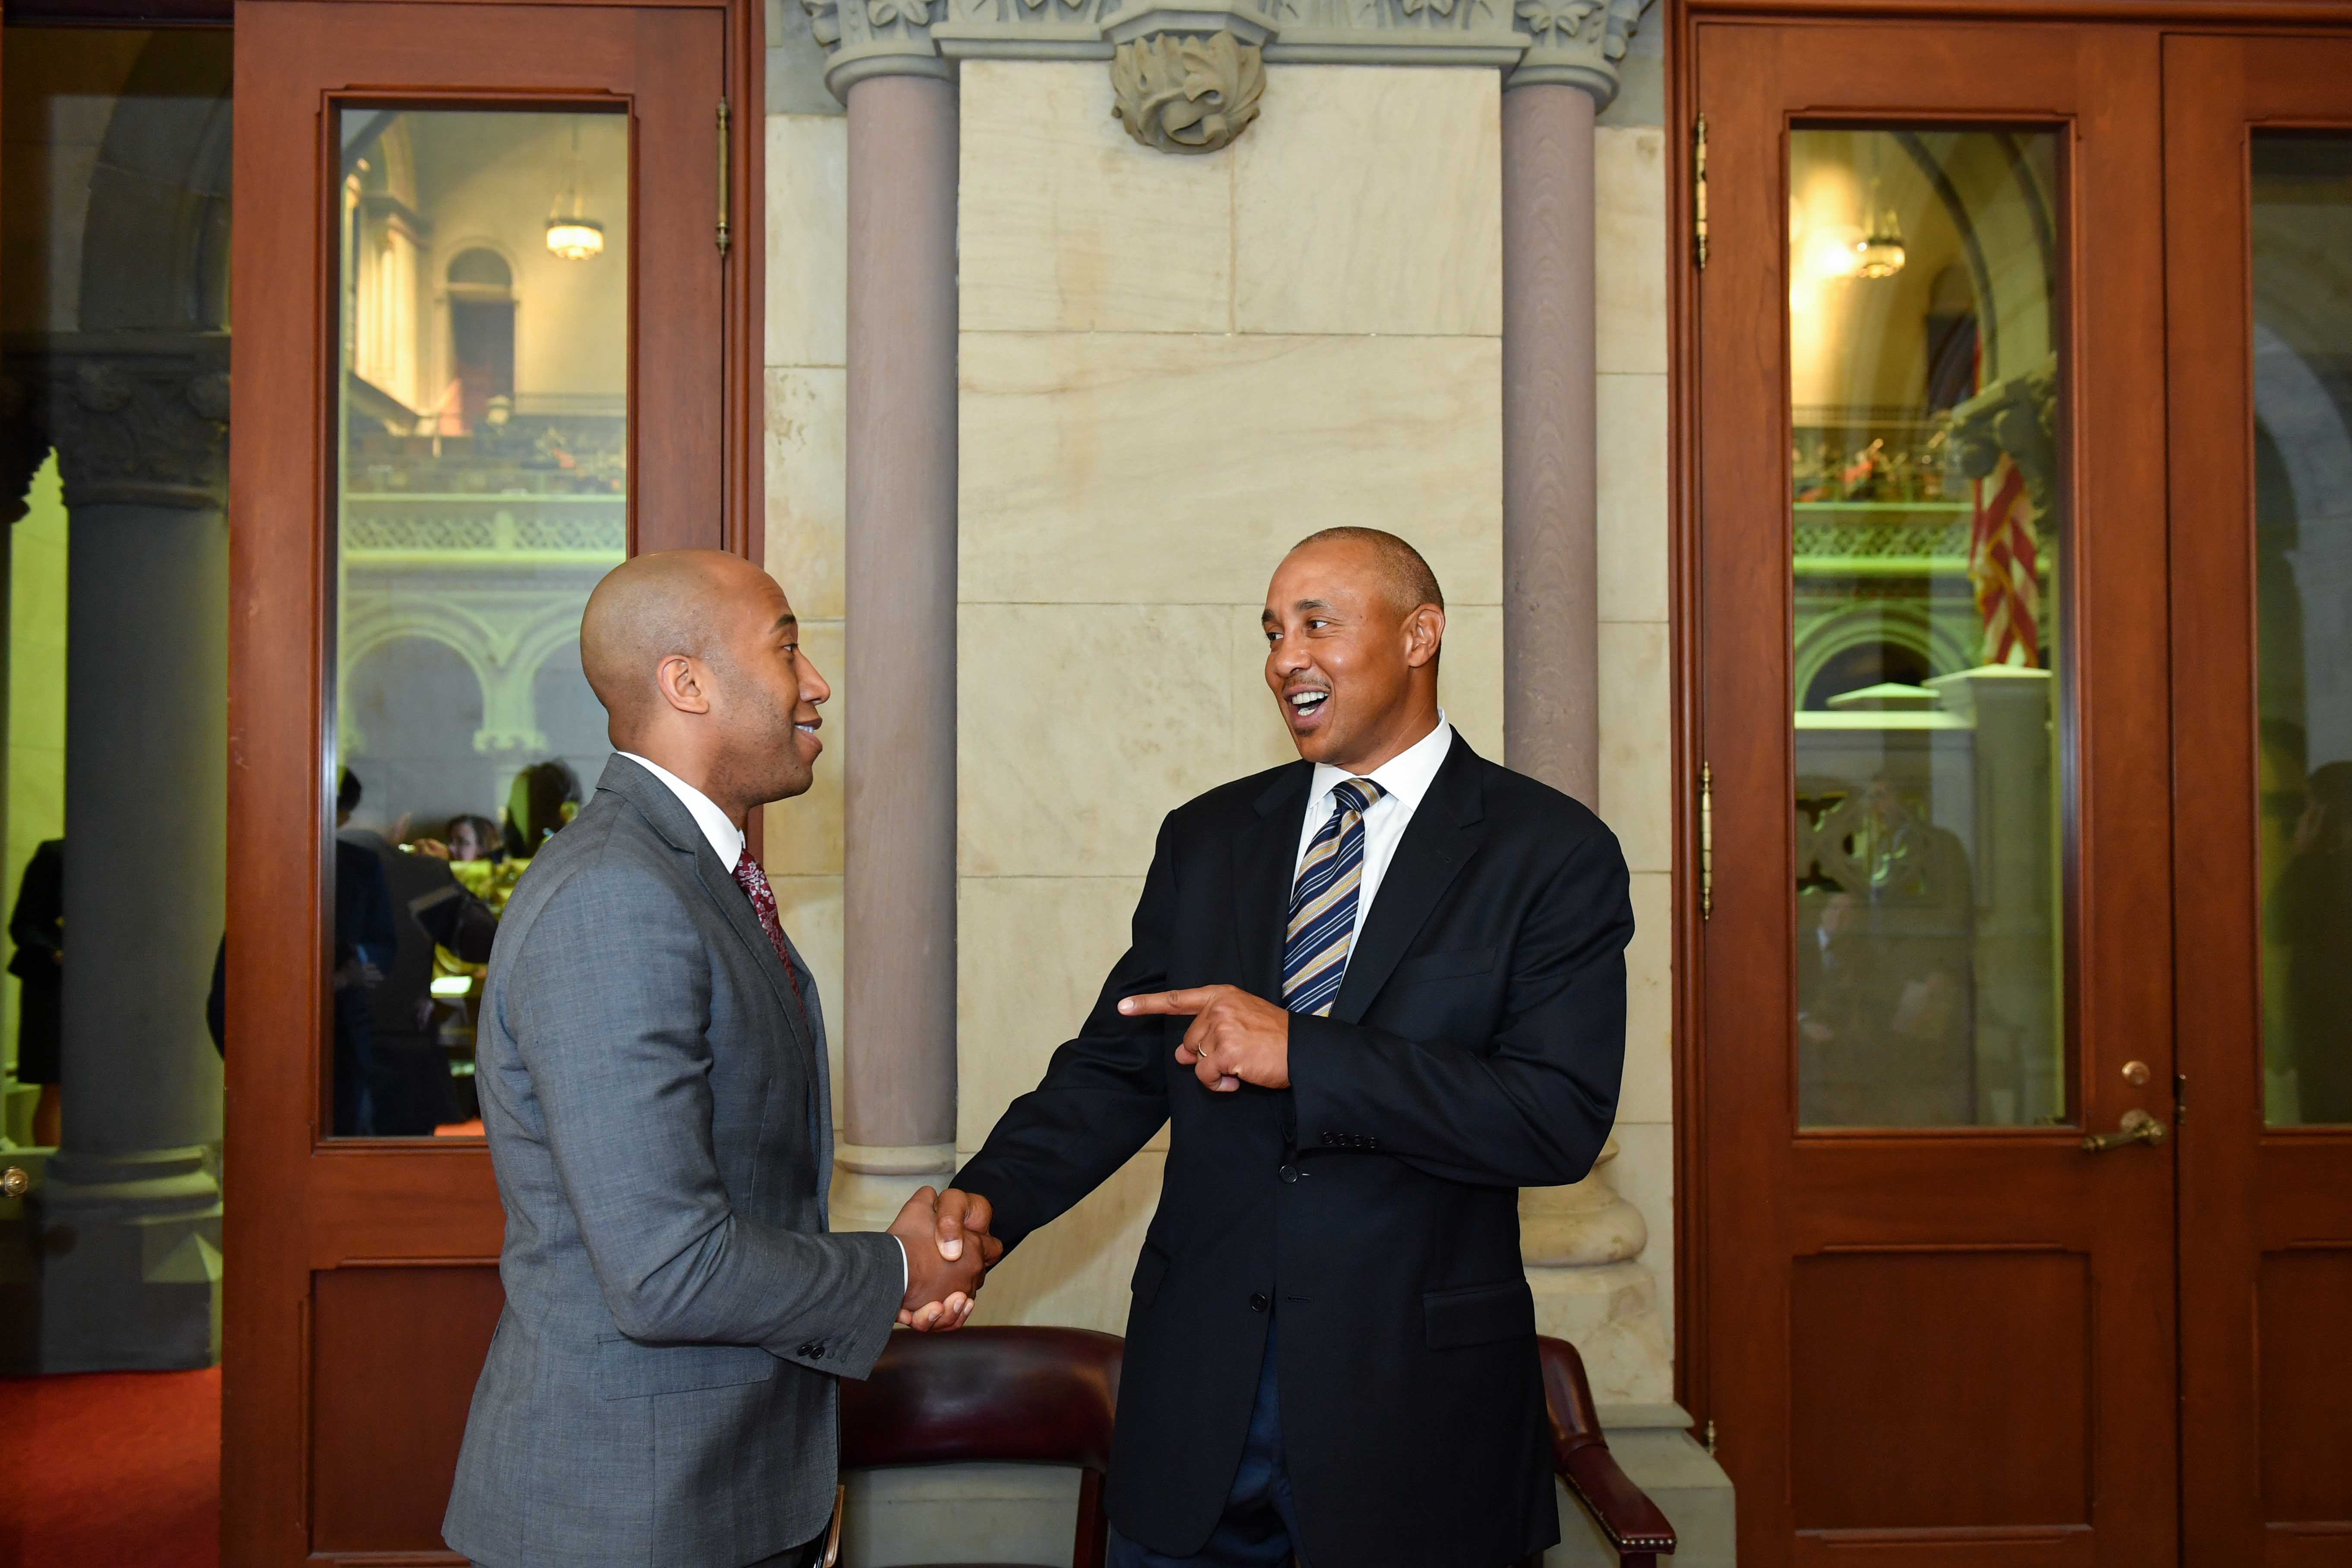 Assembly member Vanel (left) meeting with Former NBA basketball player John Starks